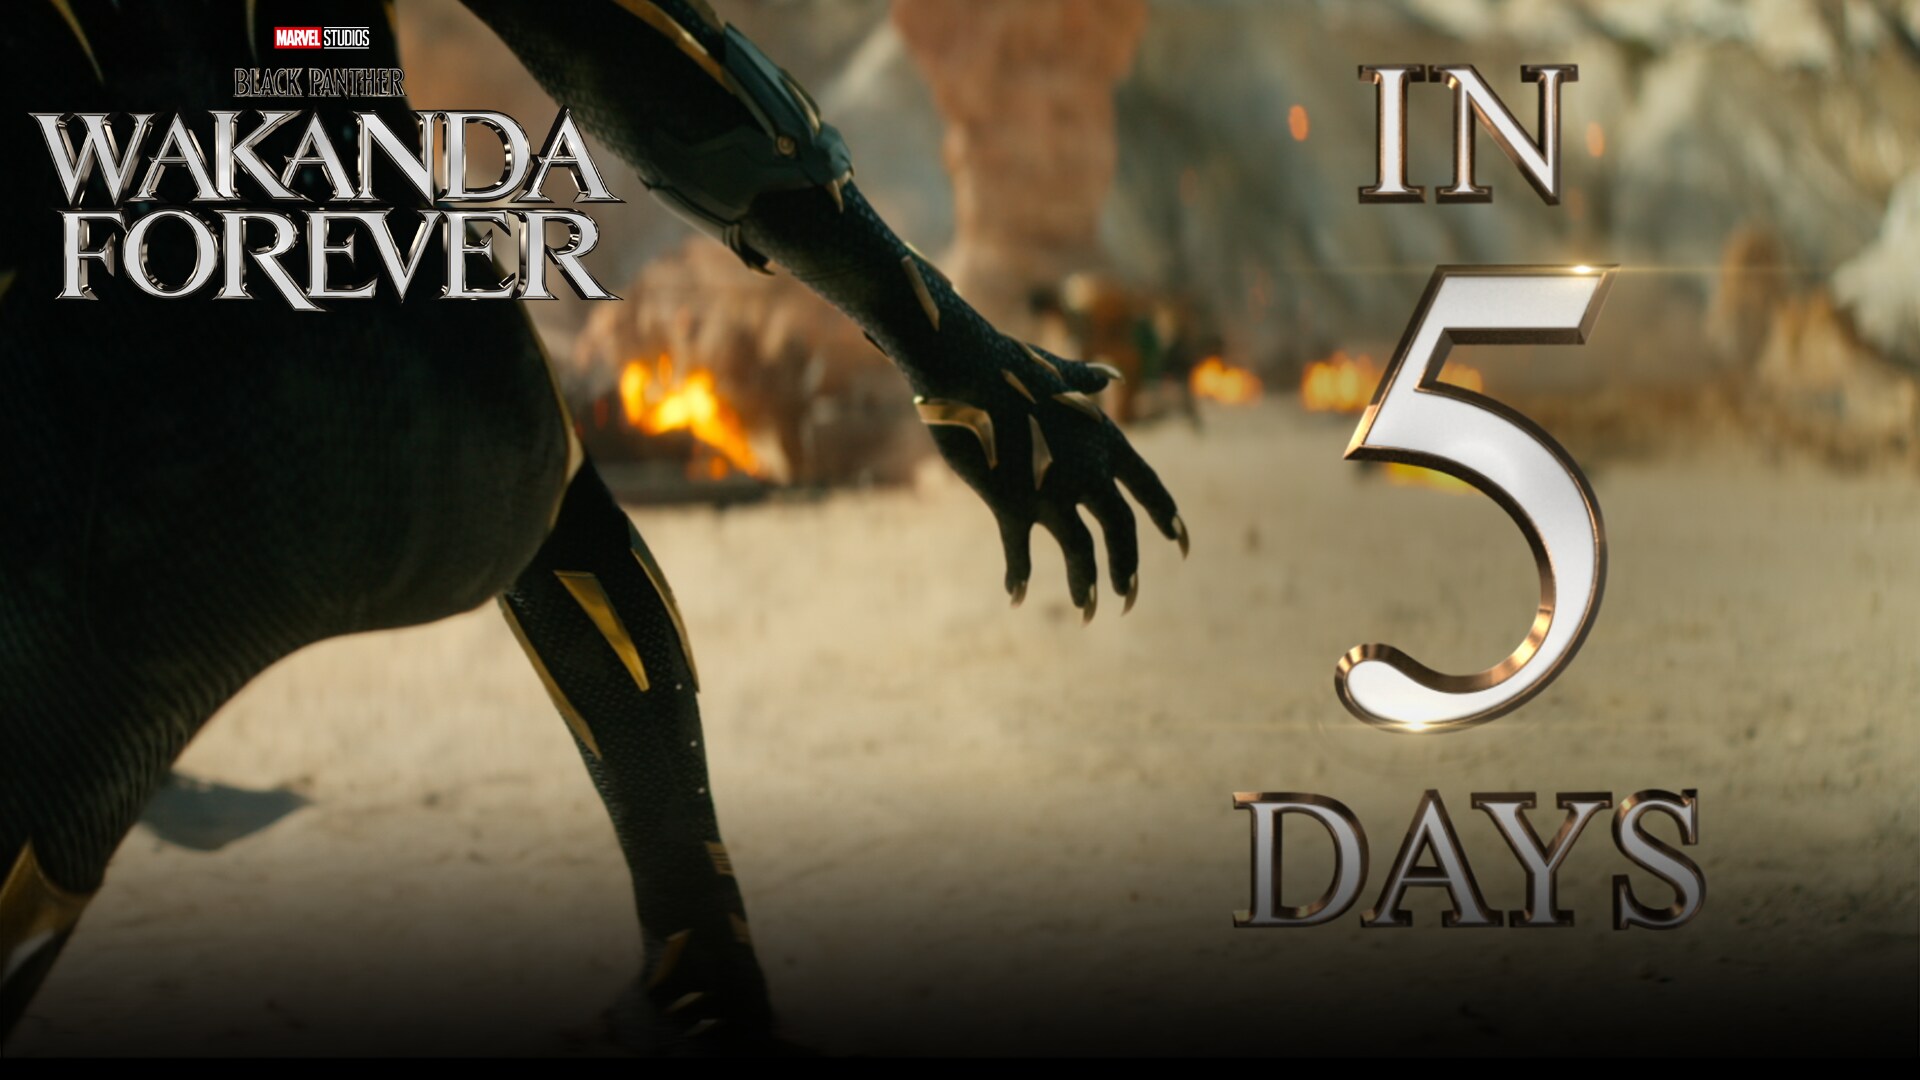 Marvel Studios’ Black Panther: Wakanda Forever | Return